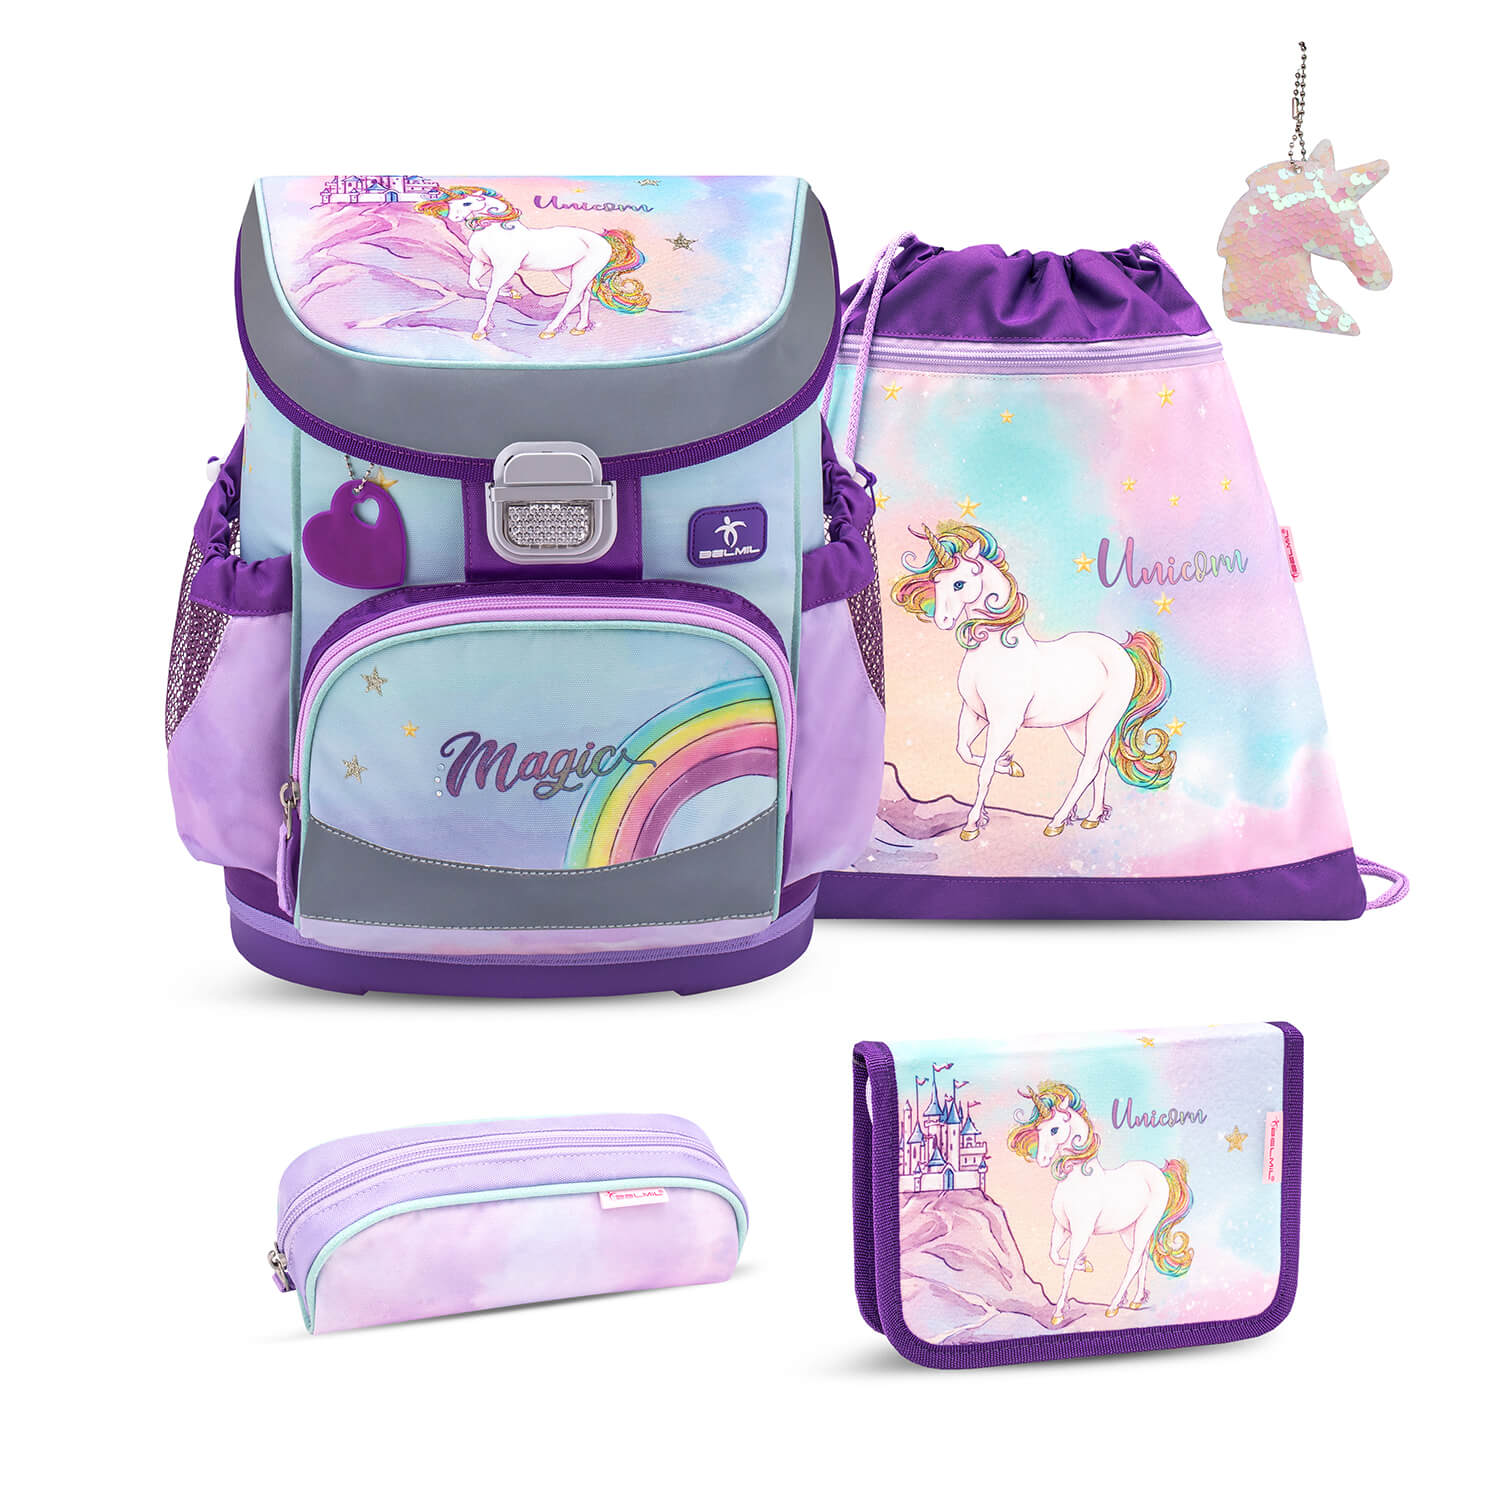 Mini-Fit Rainbow Unicorn Magic schoolbag set 5 pcs with GRATIS keychain